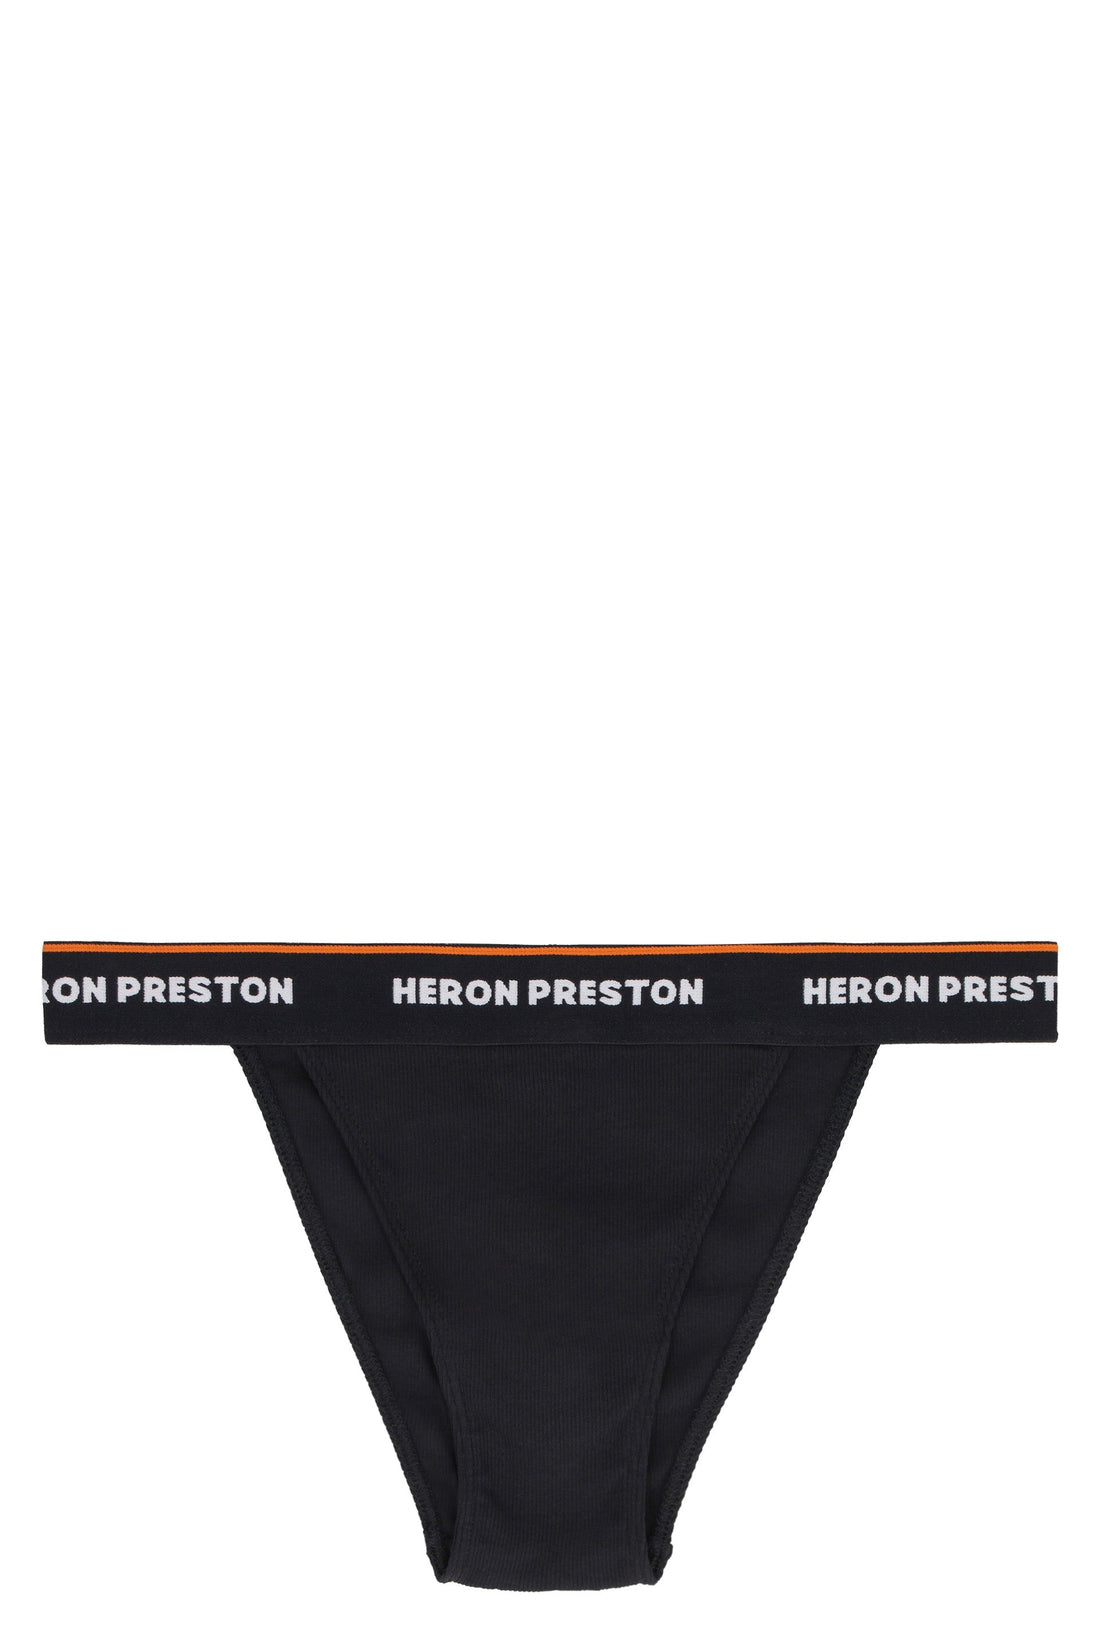 Heron Preston-OUTLET-SALE-Logoed elastic band cotton briefs-ARCHIVIST